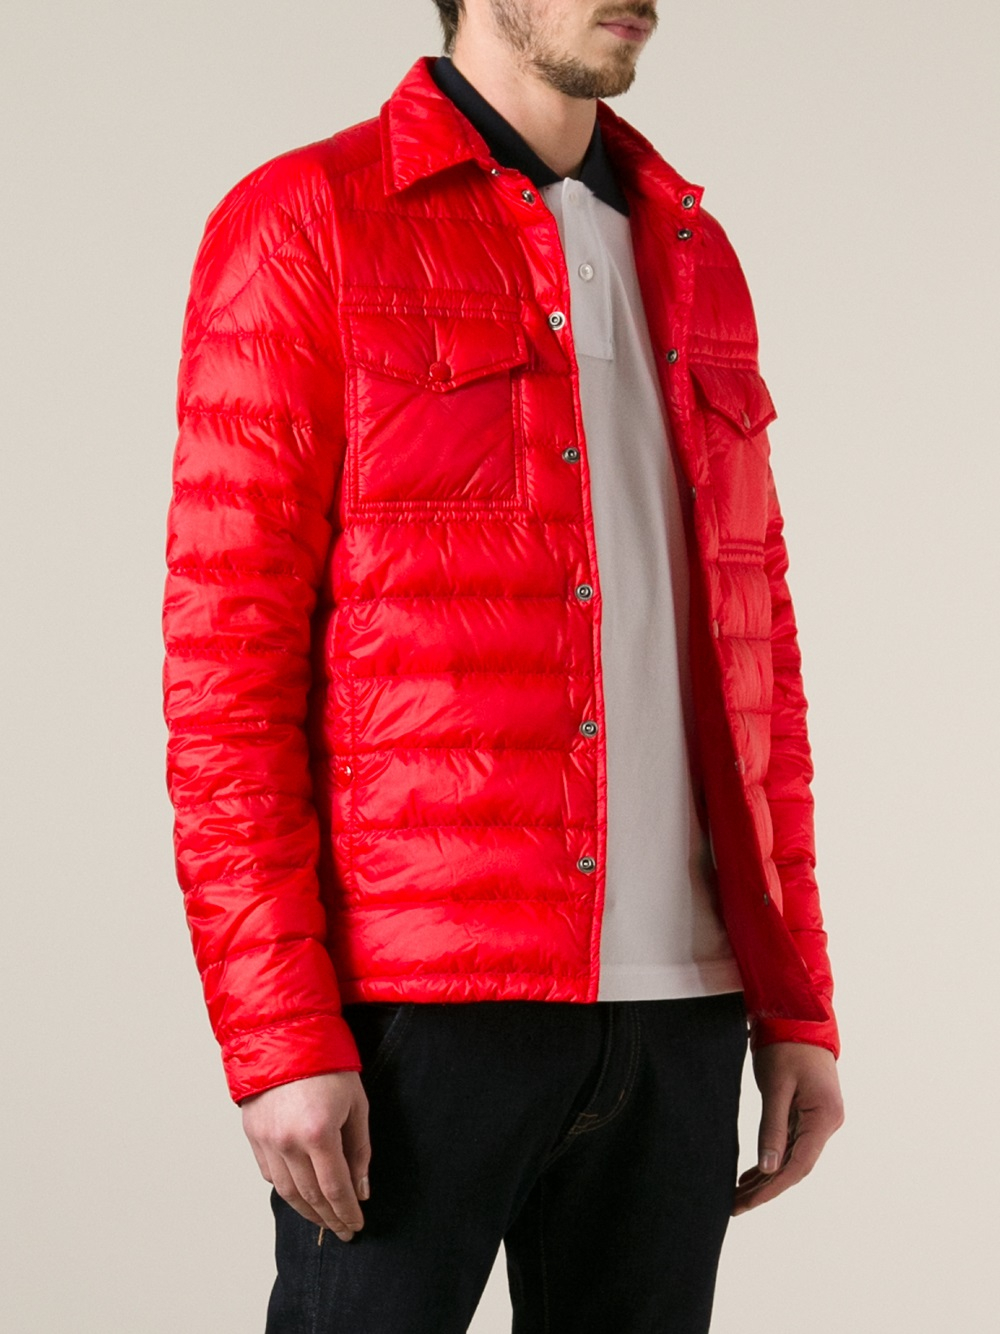 Moncler Gregoire Padded Jacket in Red for Men - Lyst